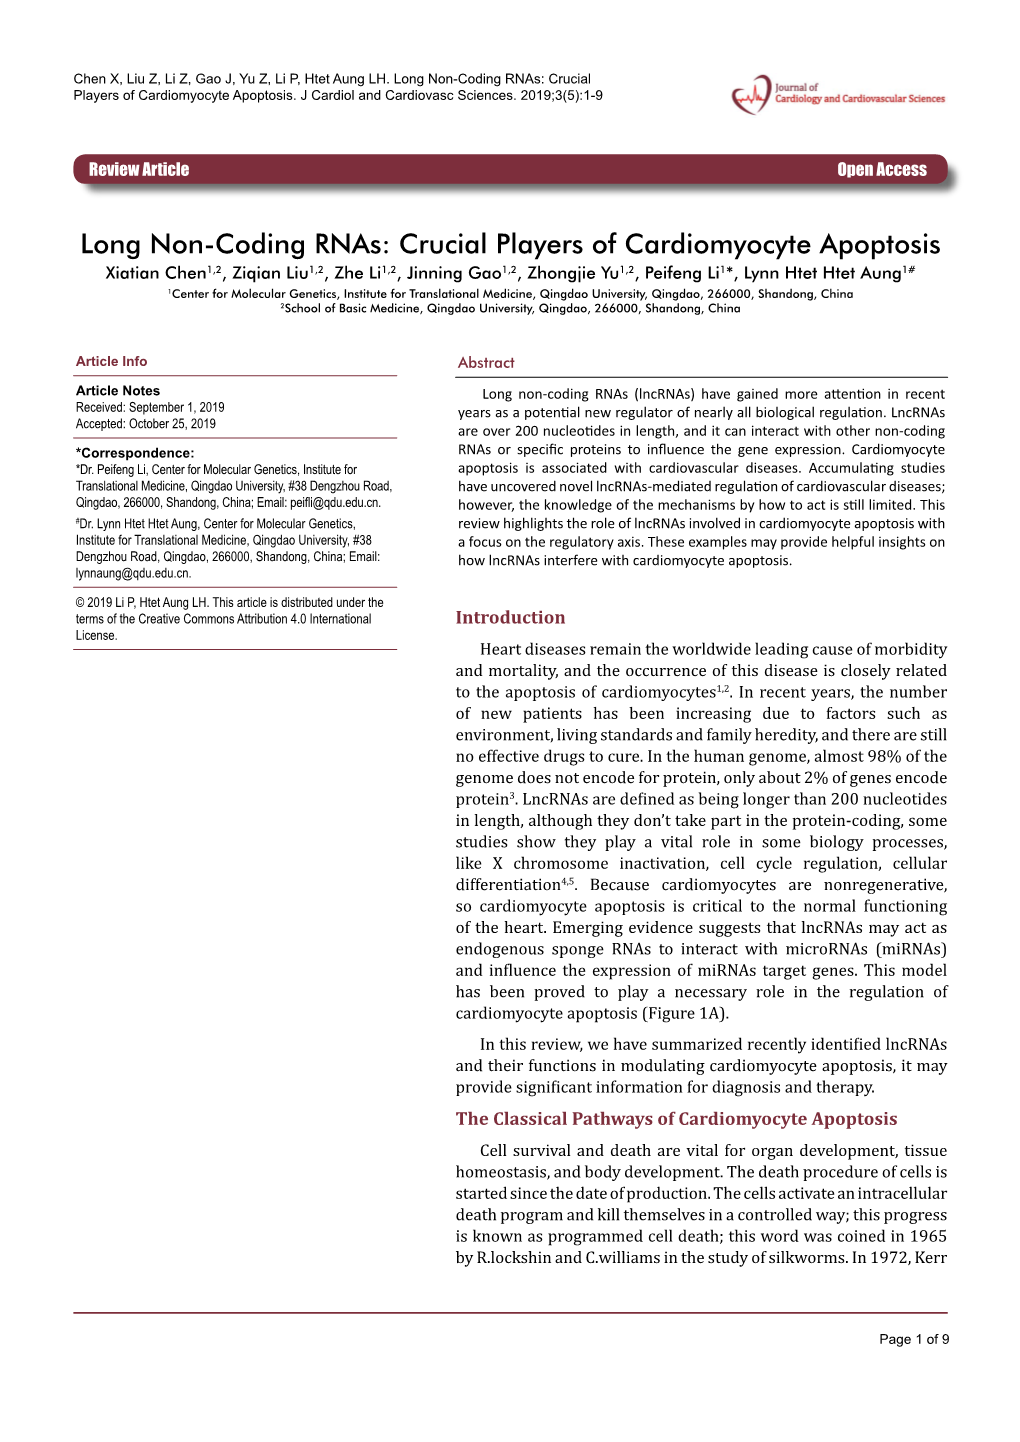 Long Non-Coding Rnas: Crucial Players of Cardiomyocyte Apoptosis